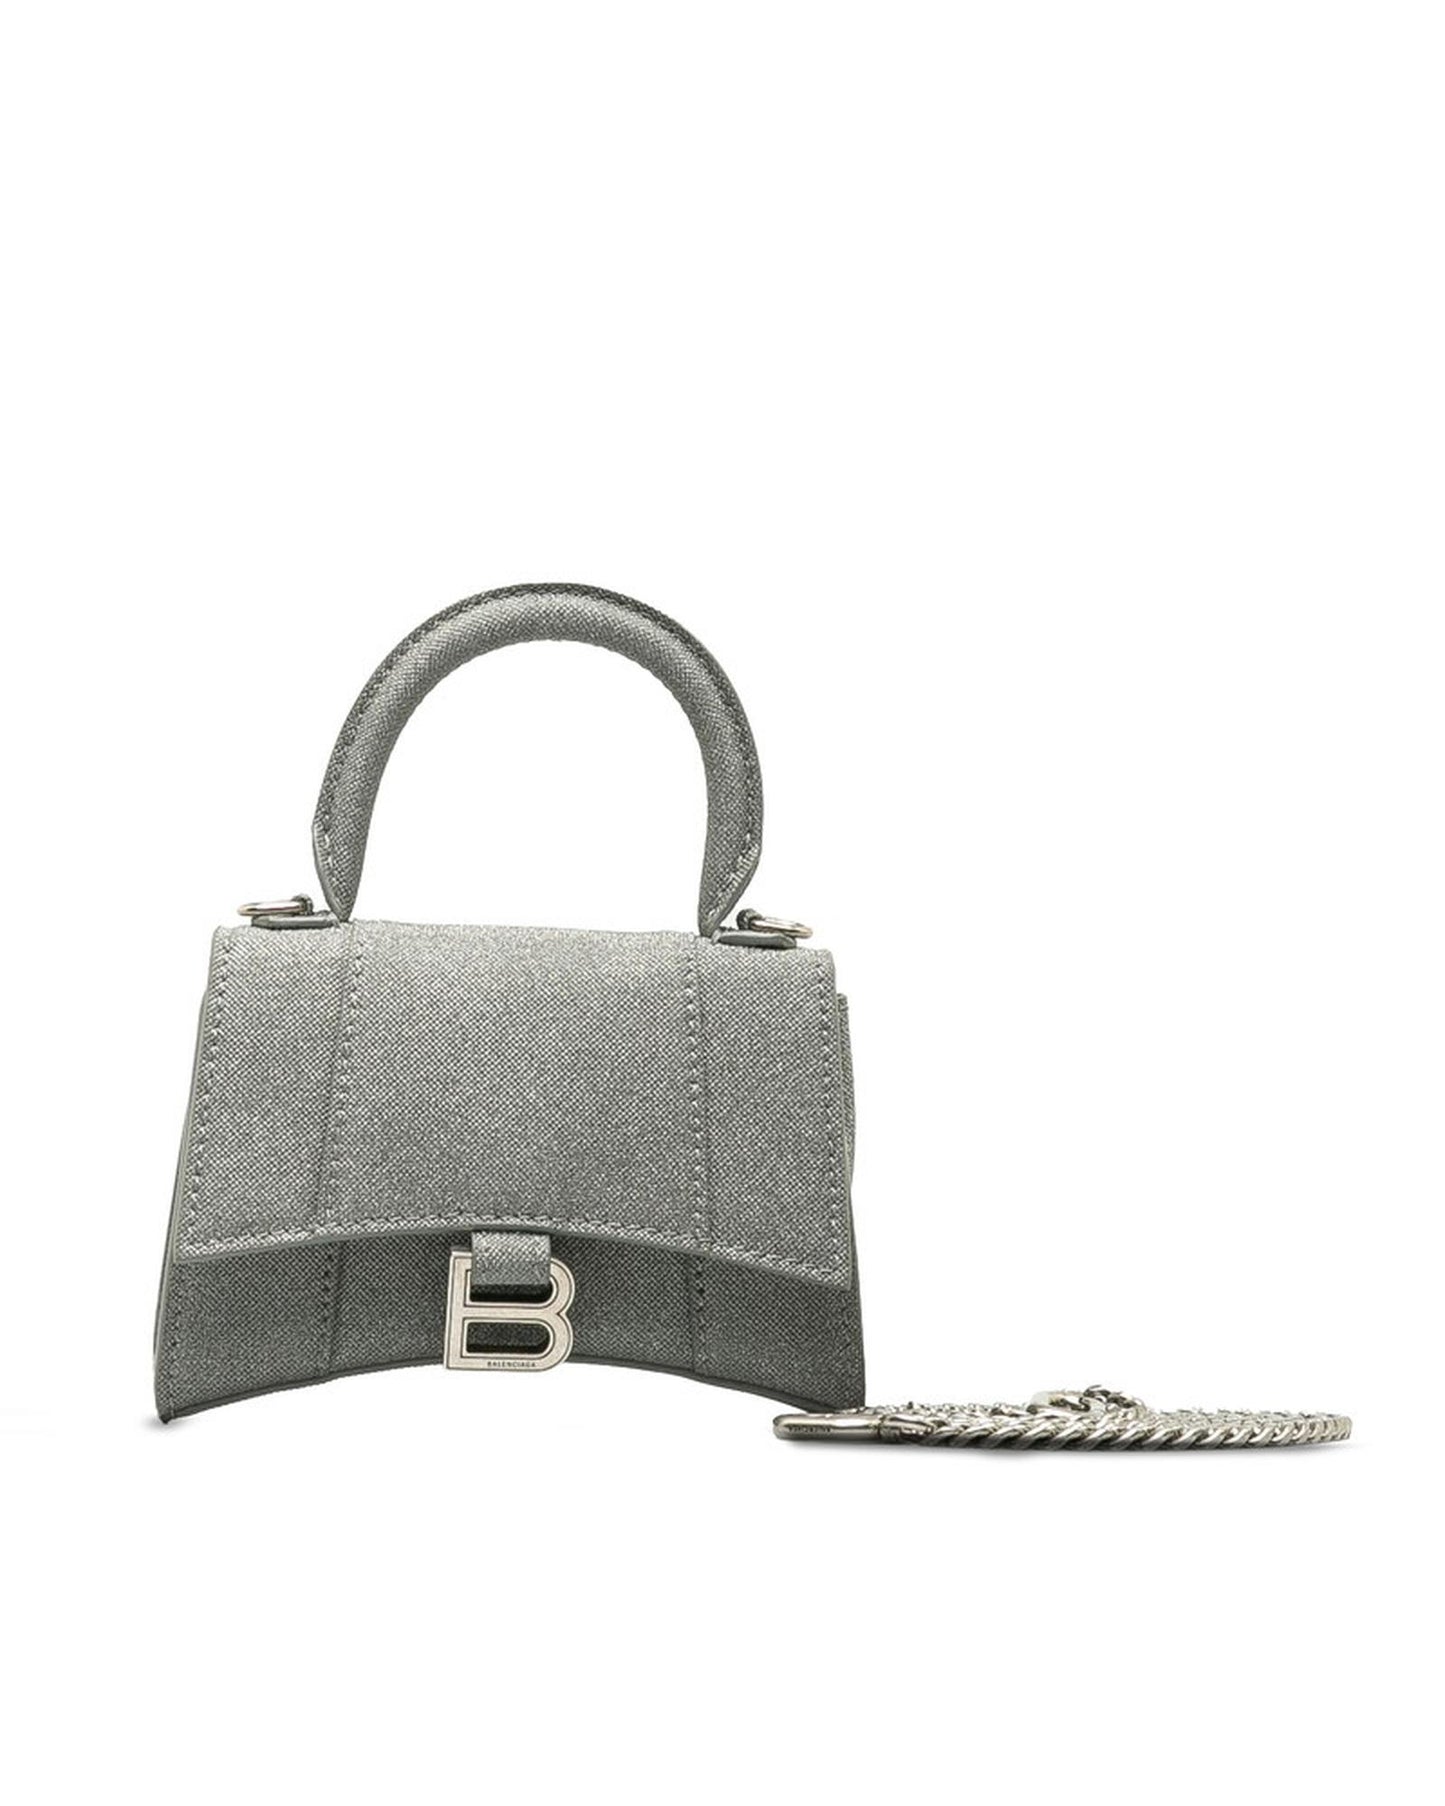 Balenciaga Women's Glitter Hourglass Bag in Grey in Grey